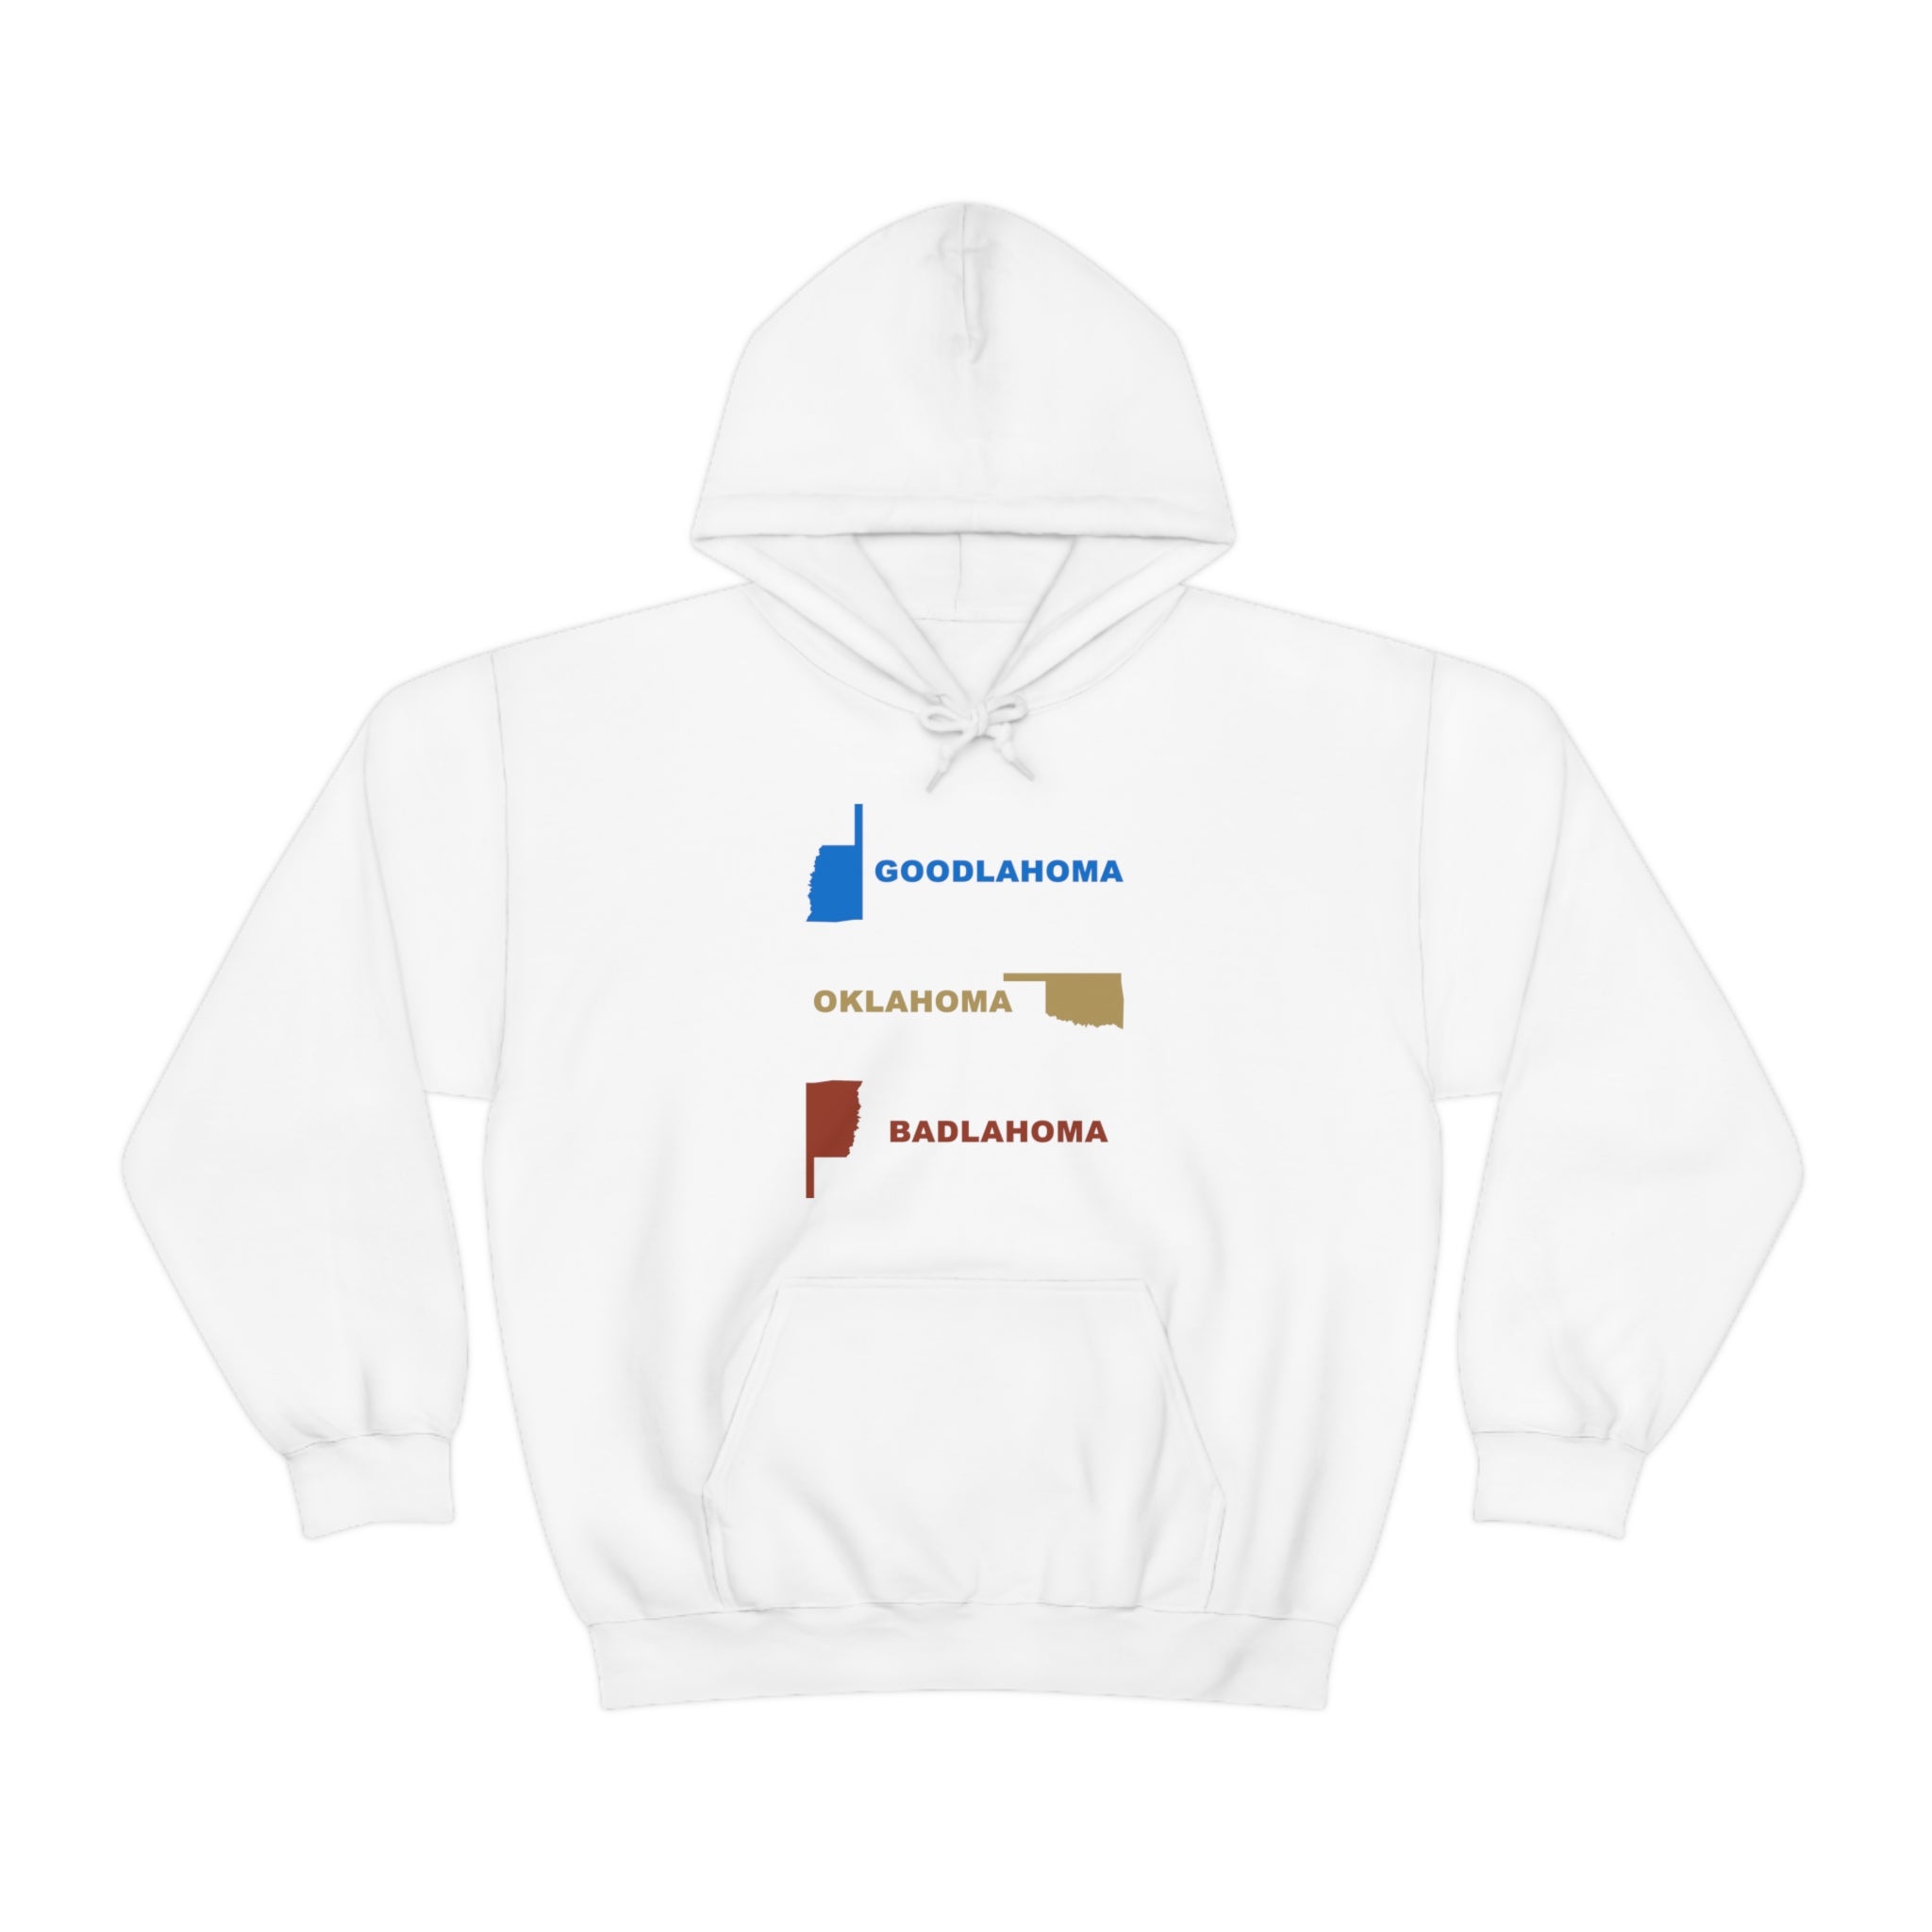 "Goodlahoma Oklahoma Badlahoma" hoodie